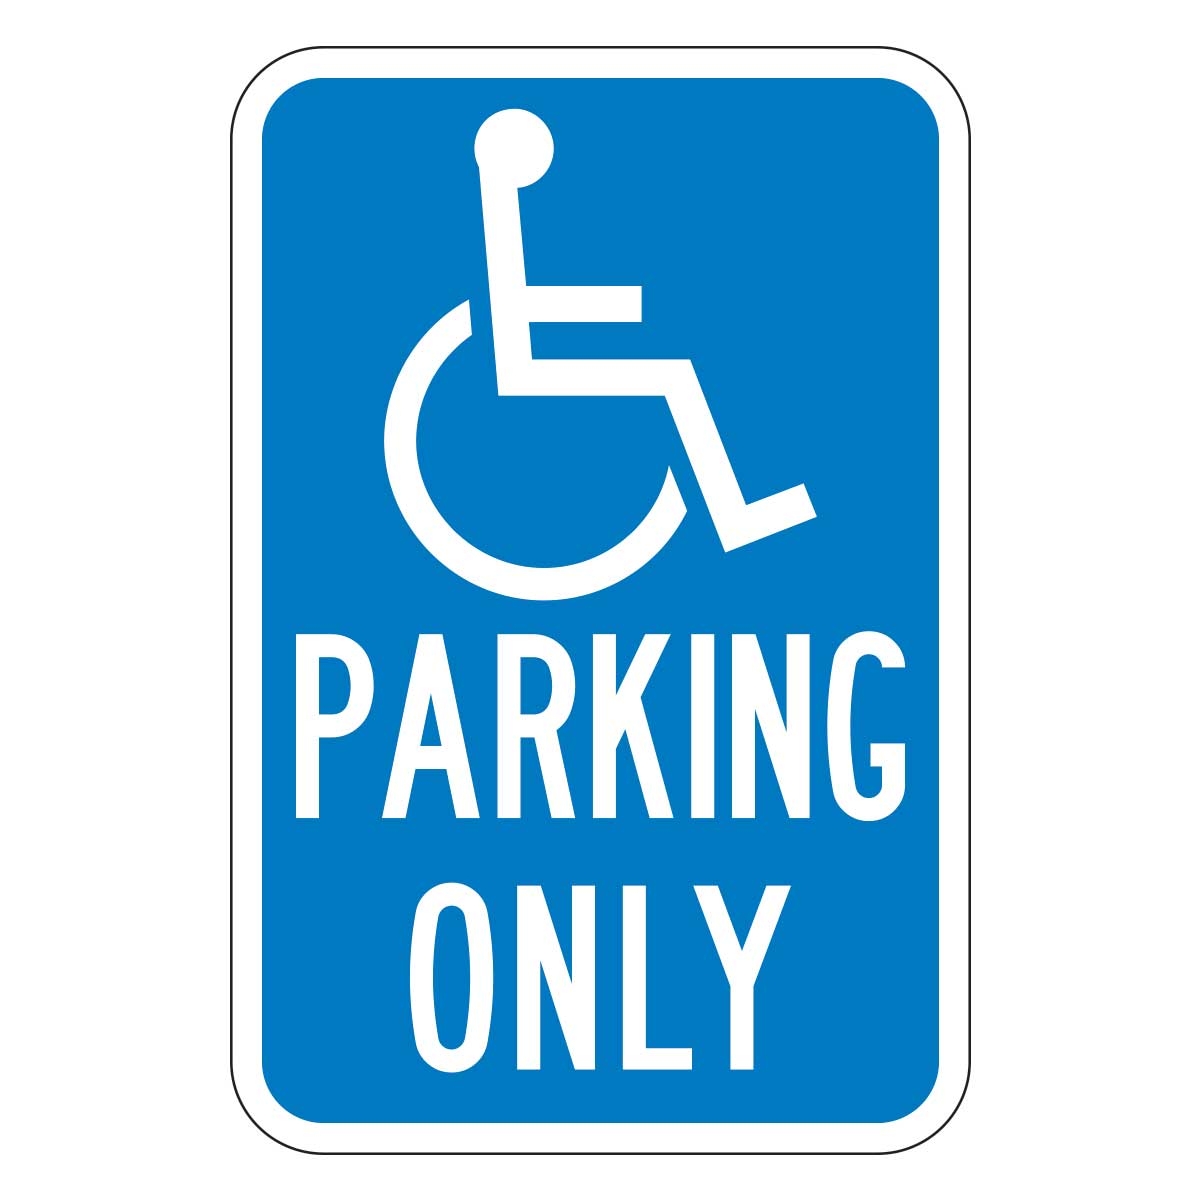 Free Printable Handicap Parking Signs, Download Free Printable Handicap ...